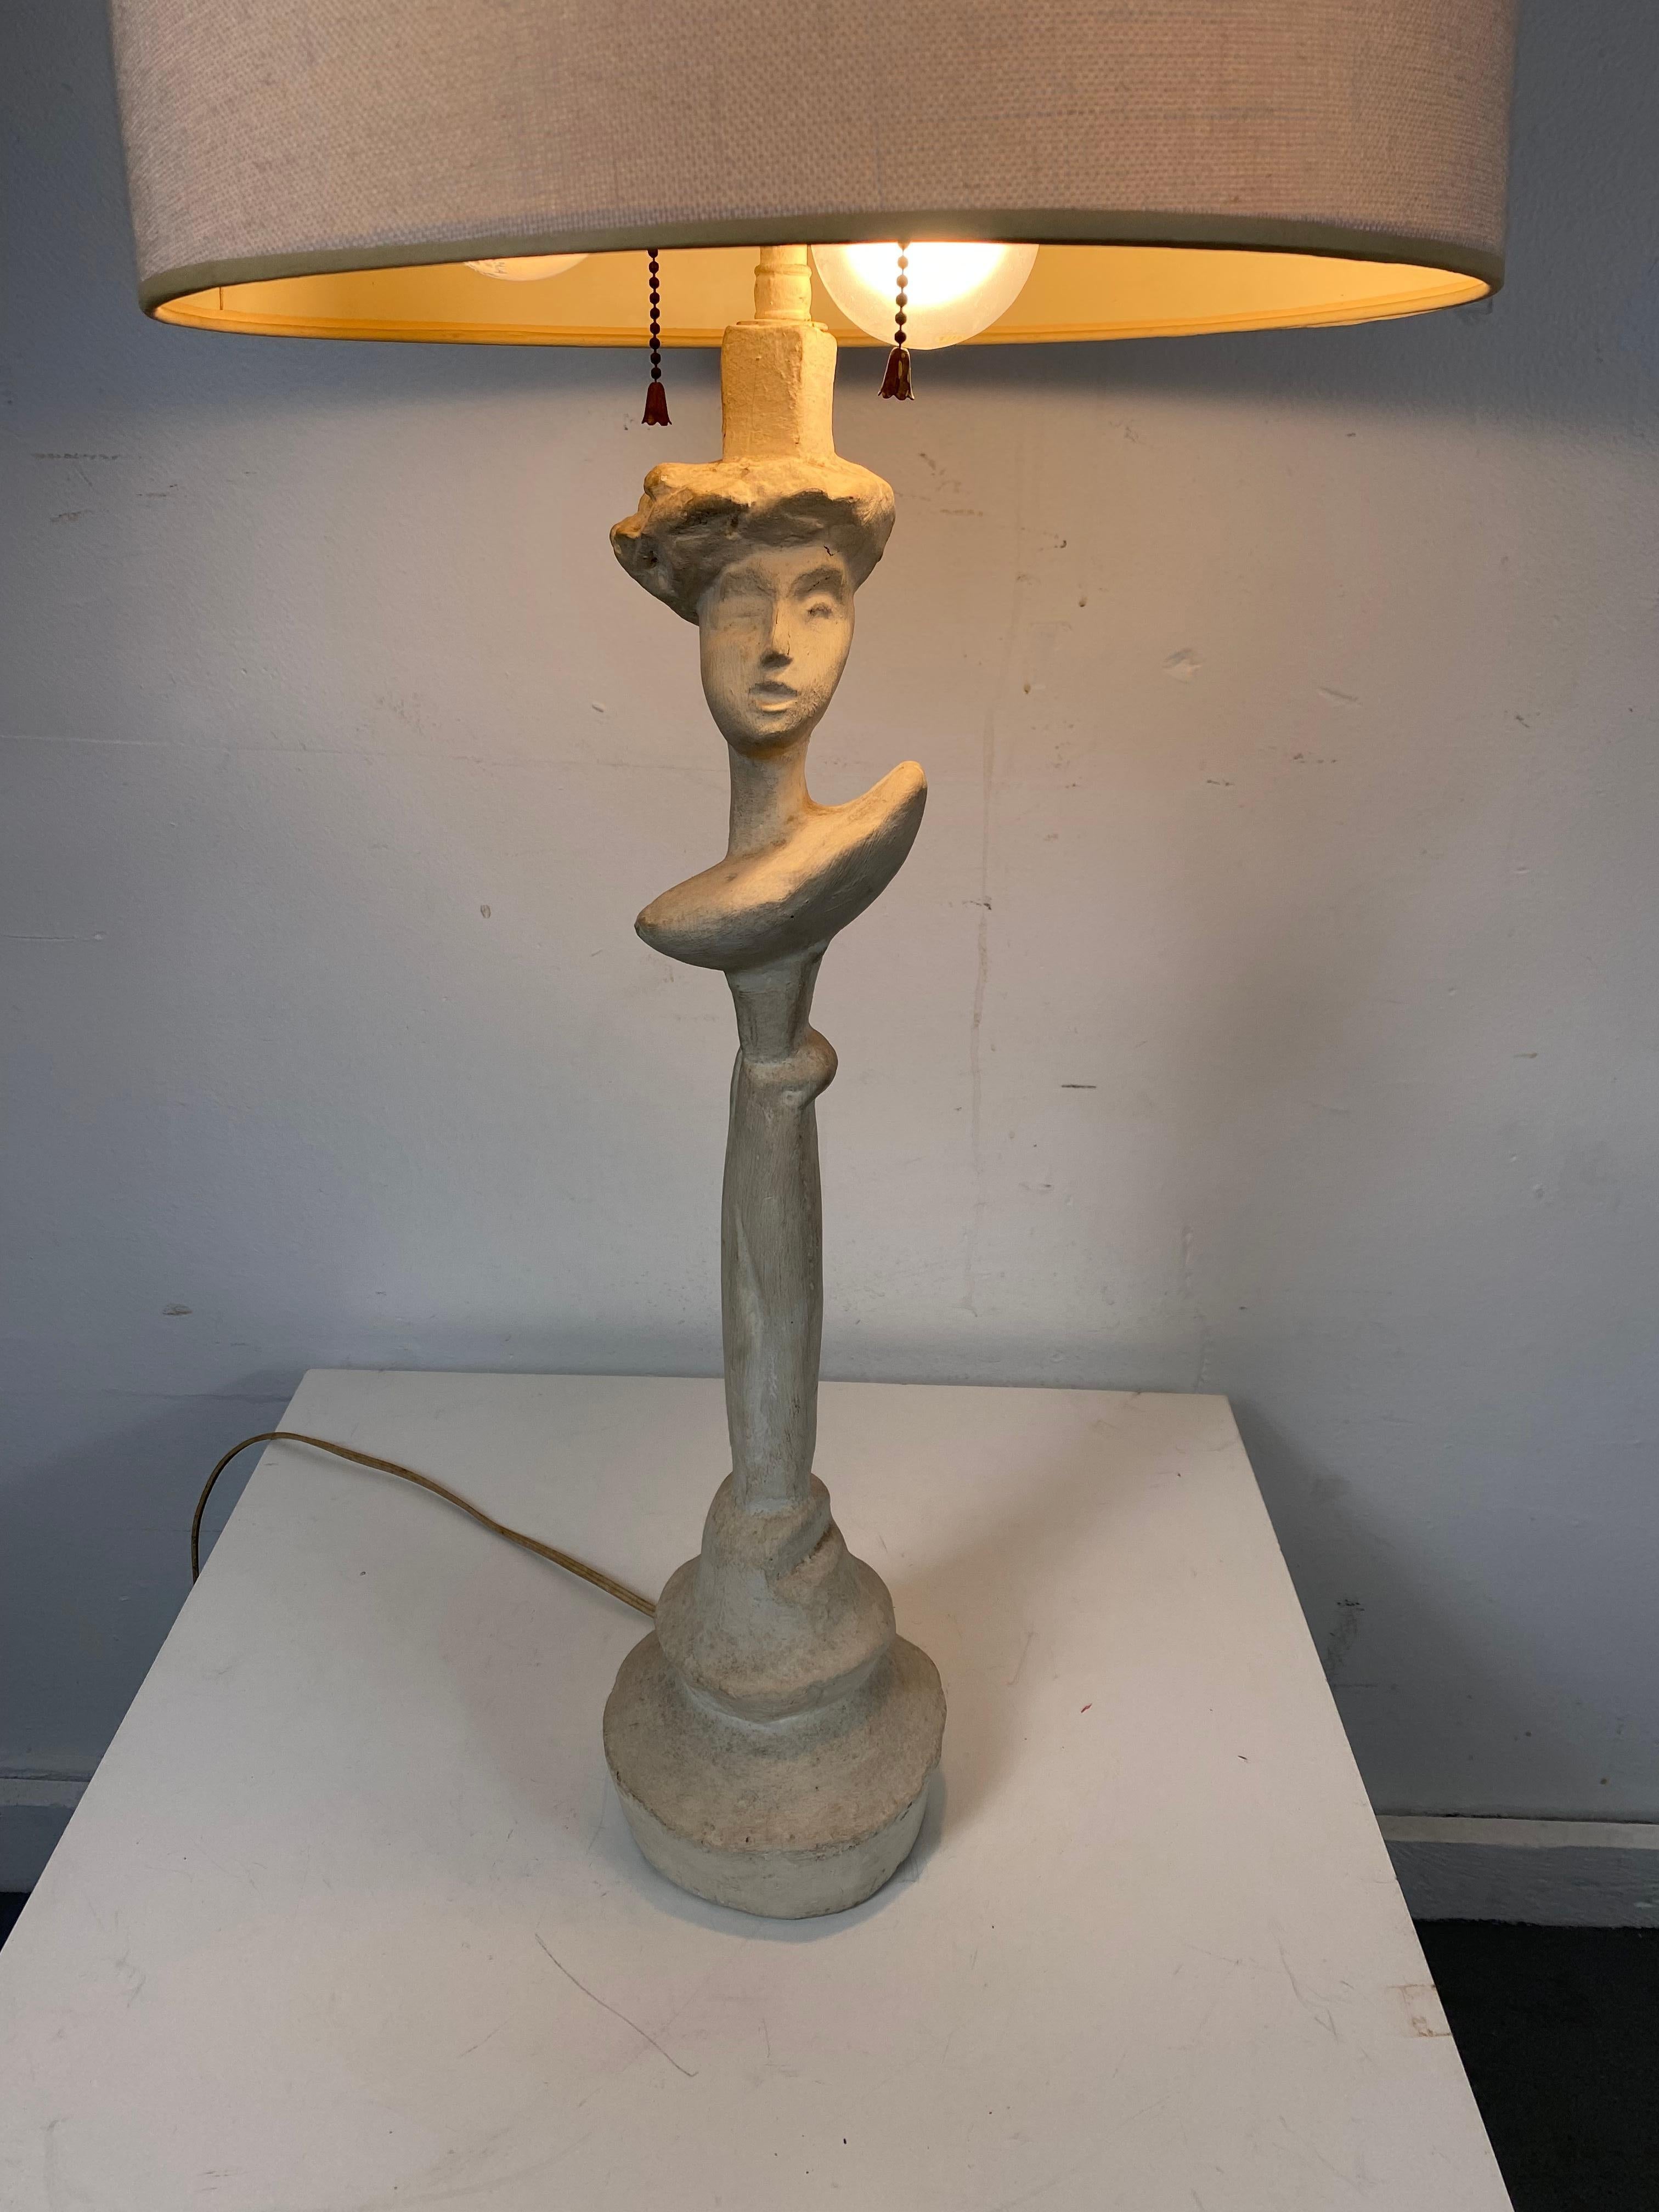 American Sirmos Masque Table Lamp / Giacometti Design, Modernist Regency